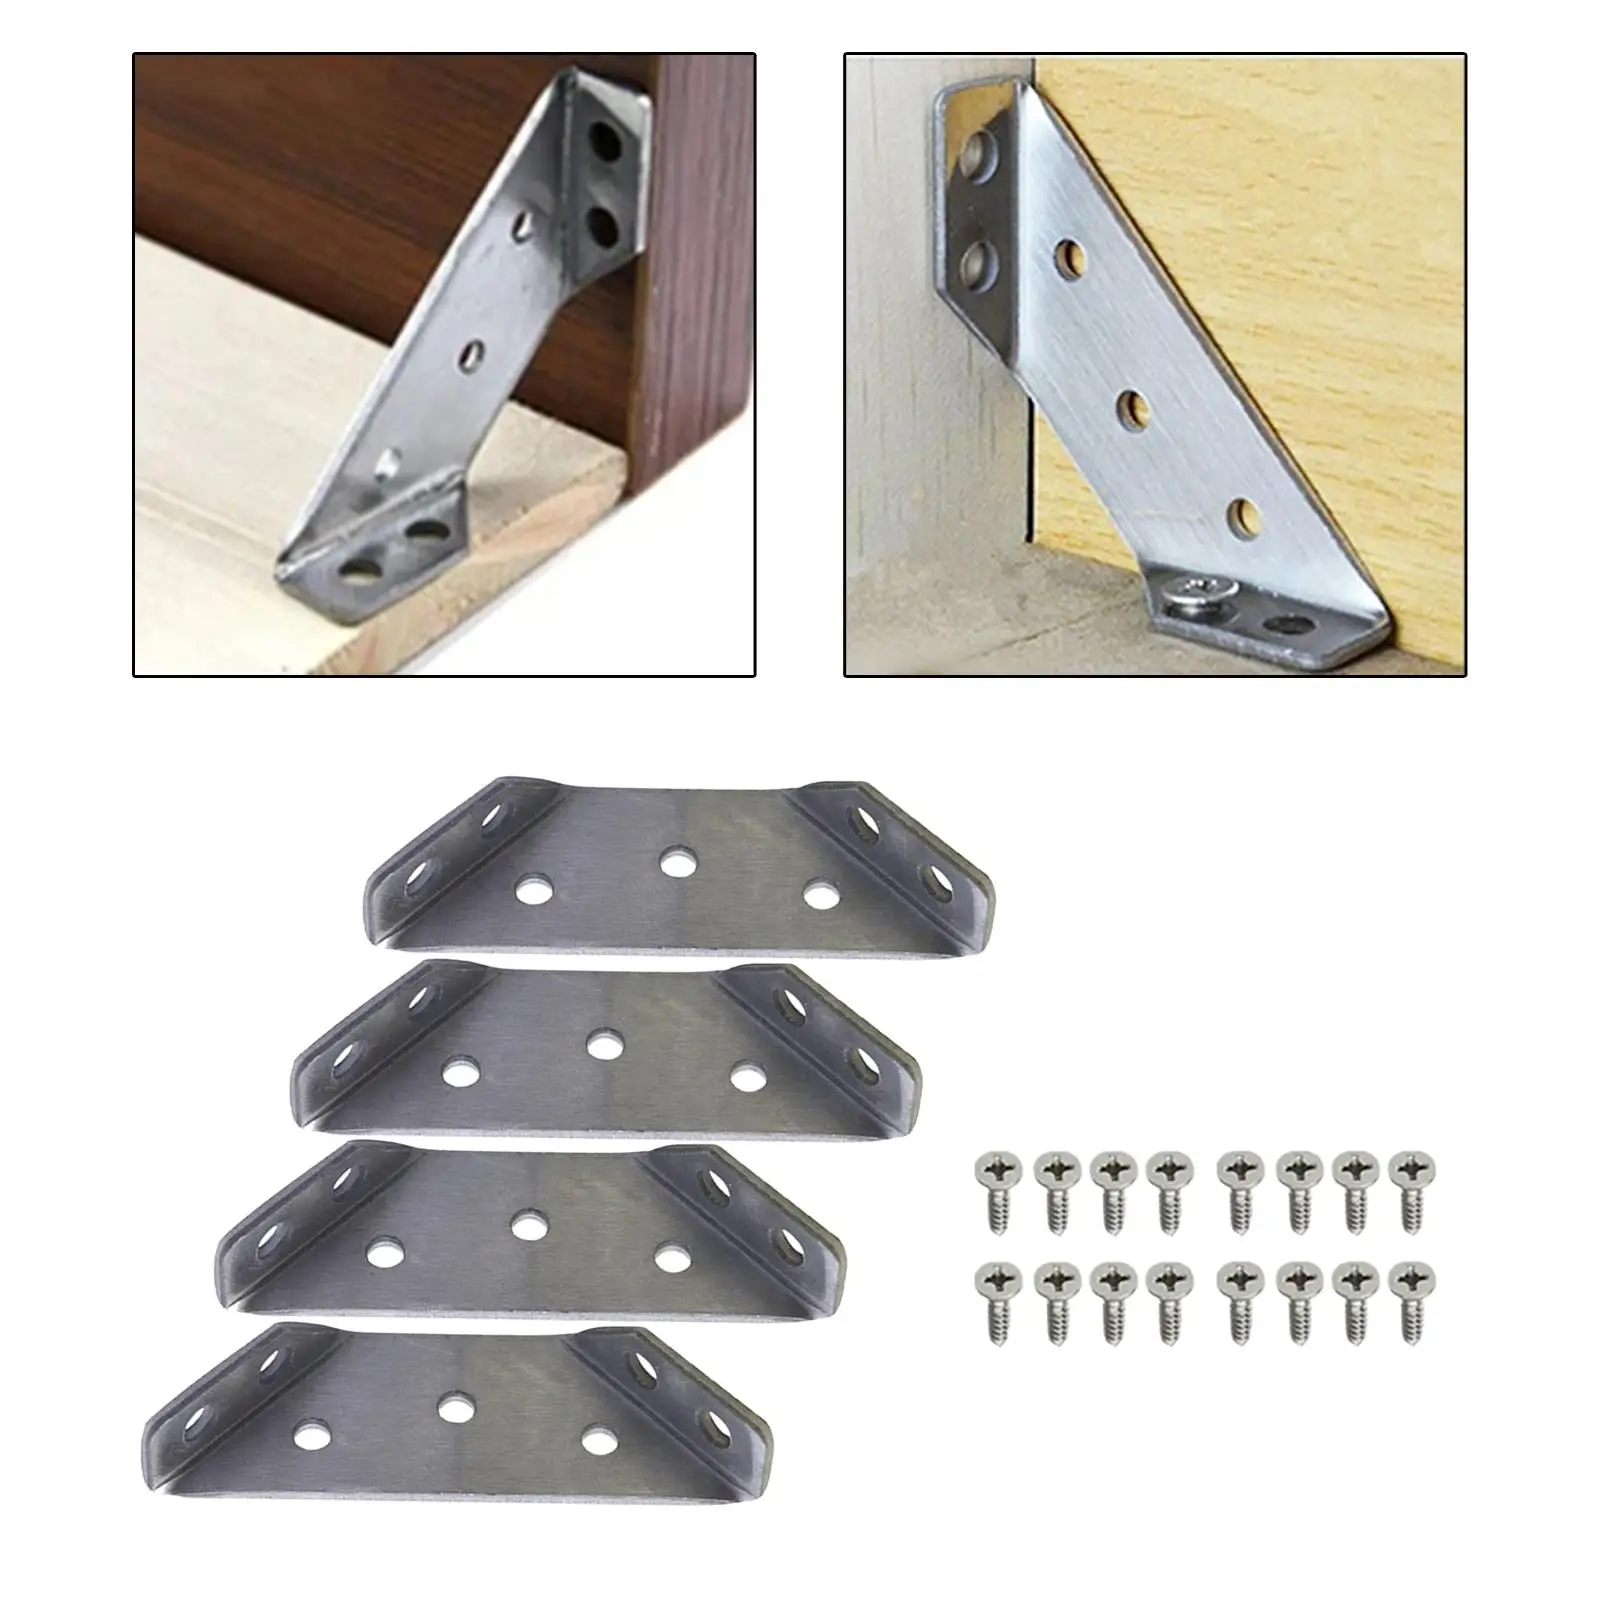 4 Pieces Angle Corner Brackets Triangular Support Furniture Corner Connector Joint Bracket for Shelves Door